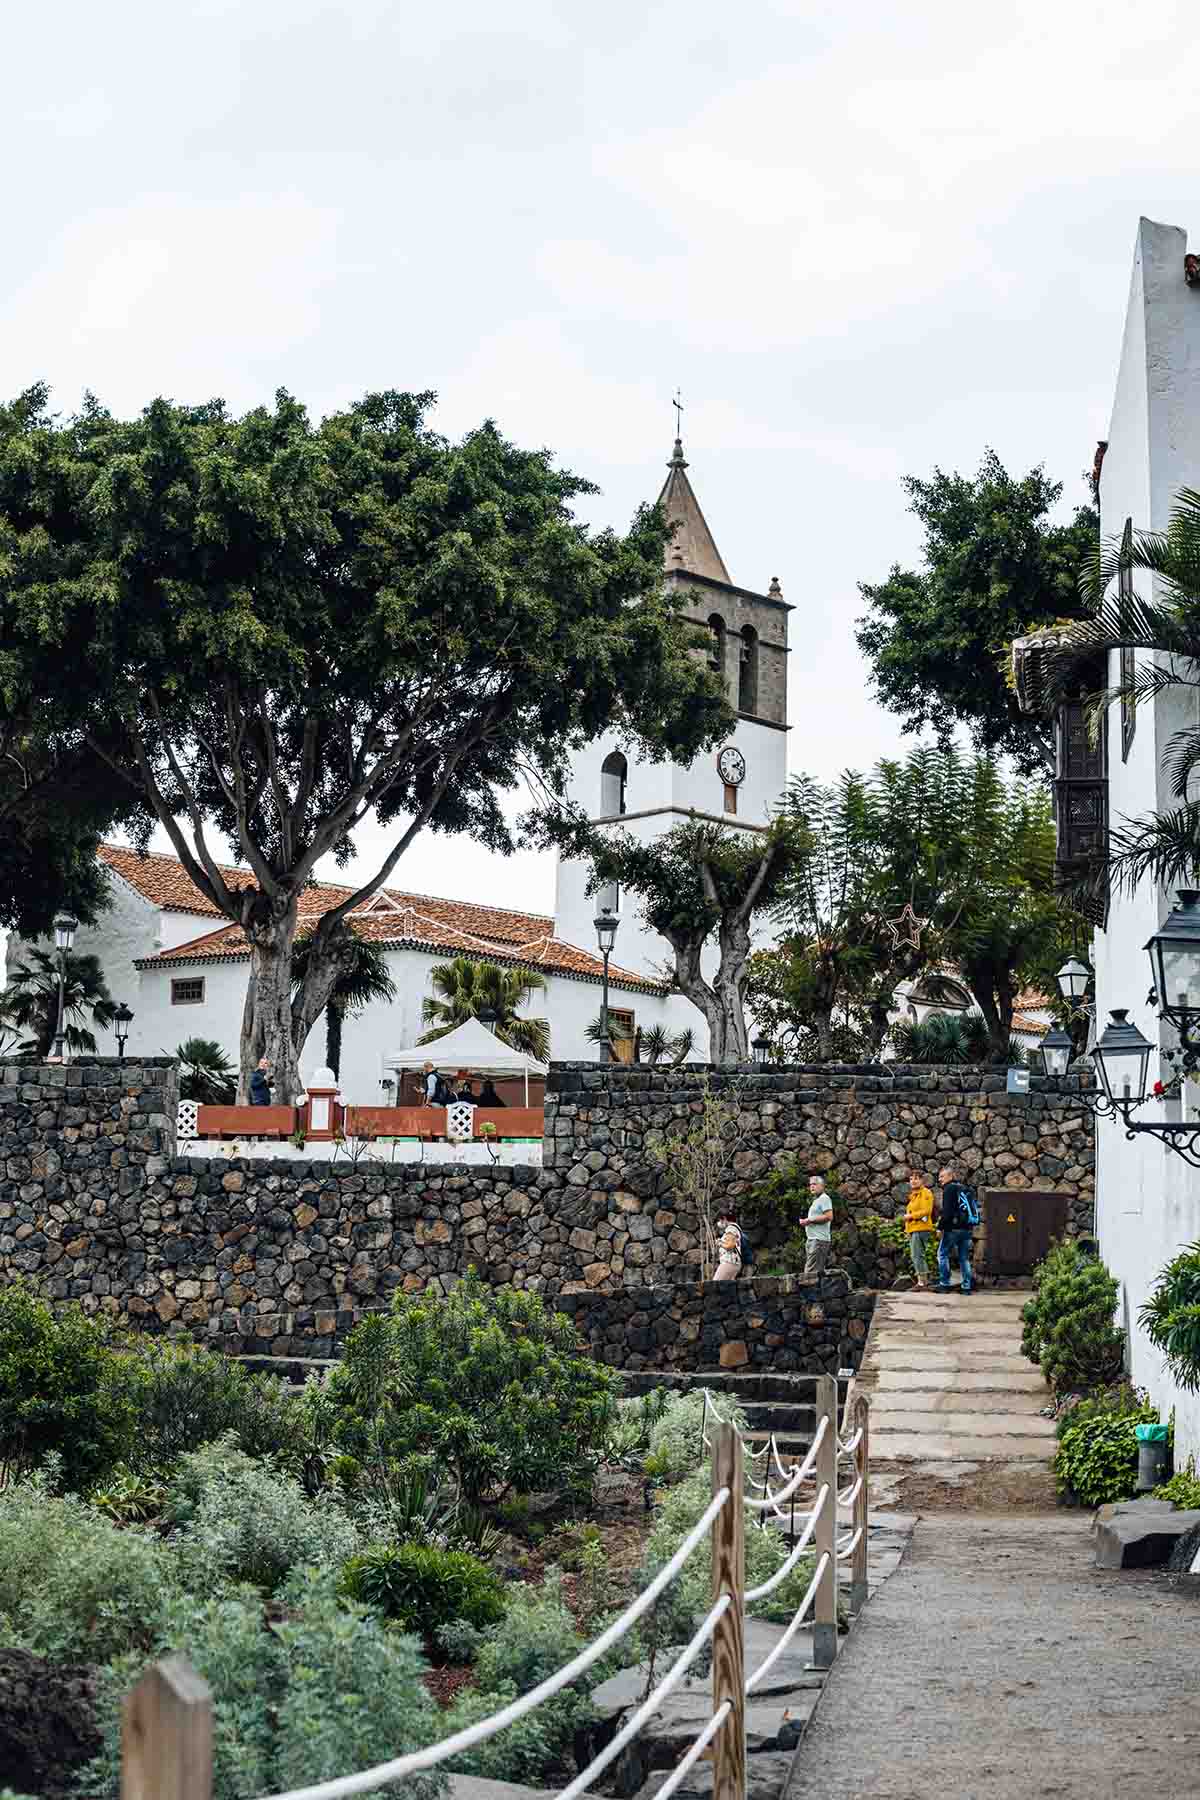 The Church of San Marcos in Tenerife